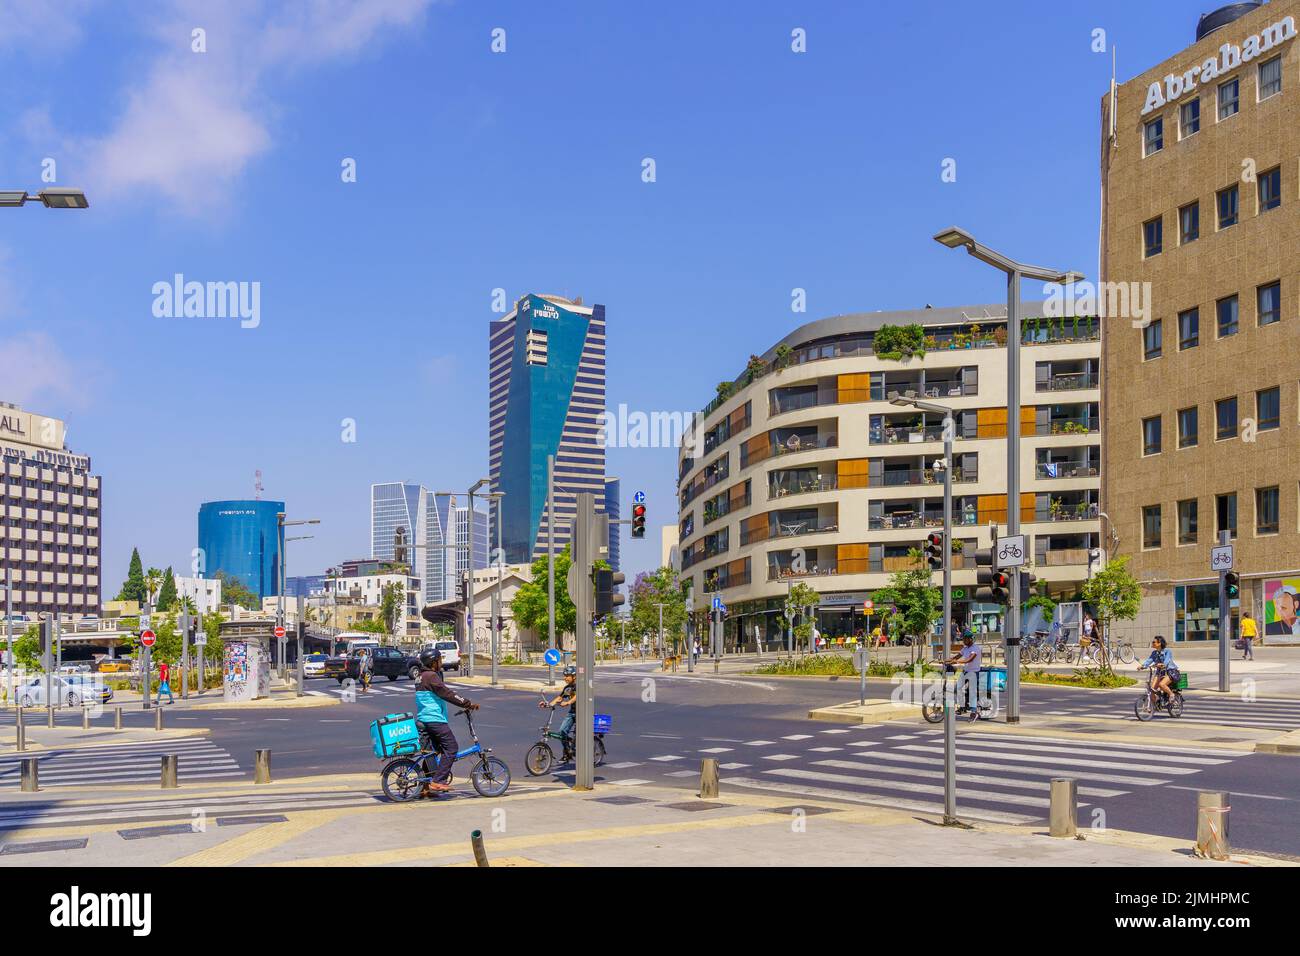 Tel-Aviv, Israel - May 26, 2022: Scene of the Yehuda ha-Levi Street, with various buildings, locals, and visitors, in Tel-Aviv, Israel Stock Photo